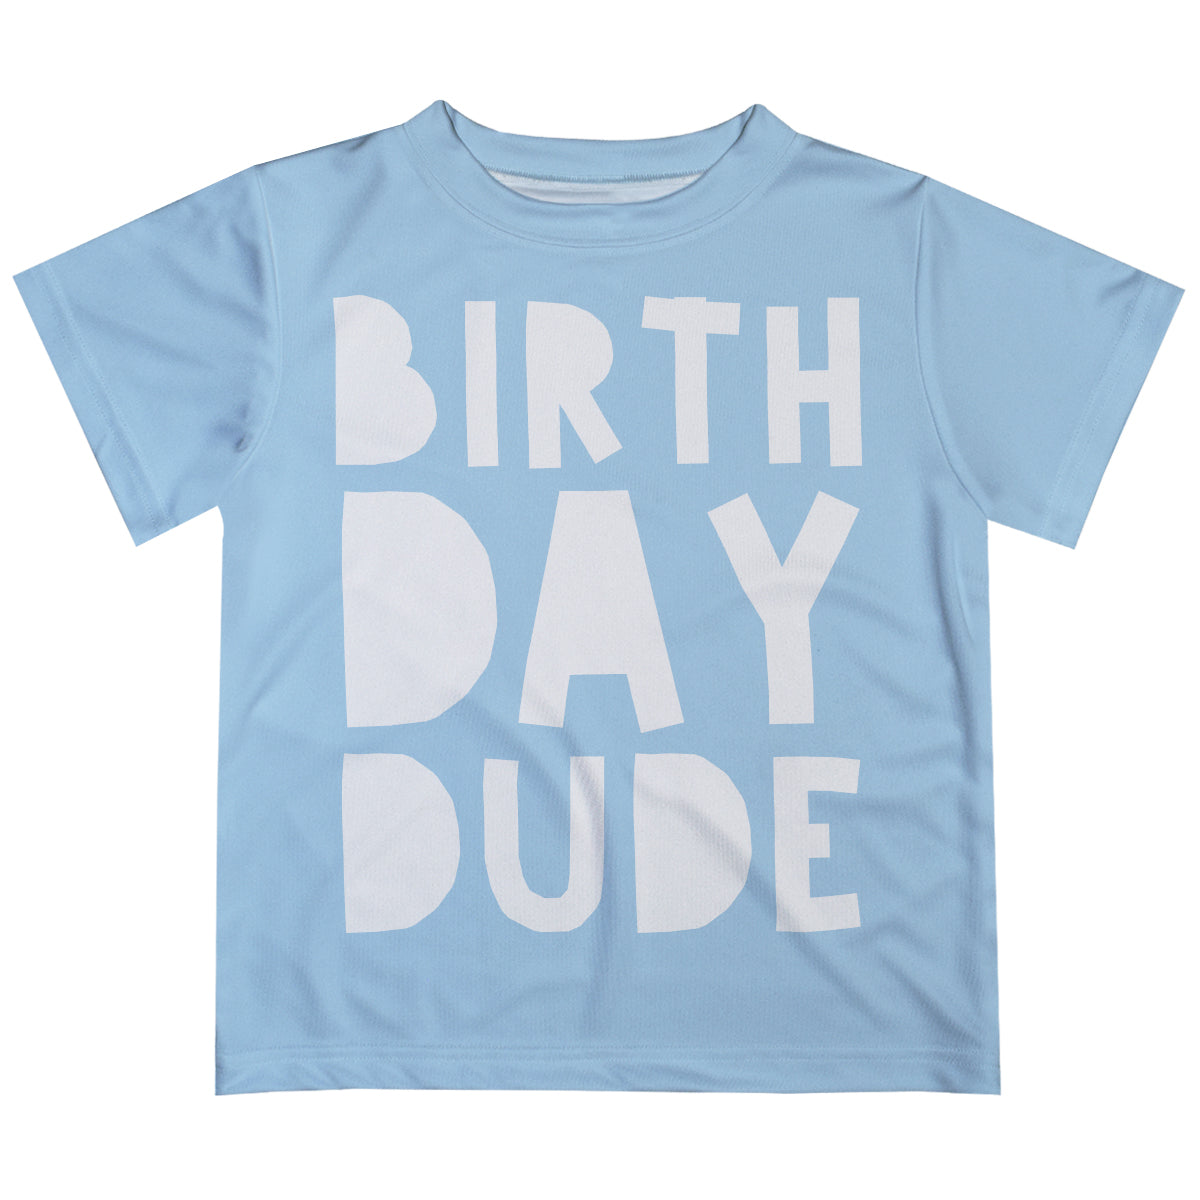 Light blue short sleeve birthday dude boys tee shirt - Wimziy&Co.